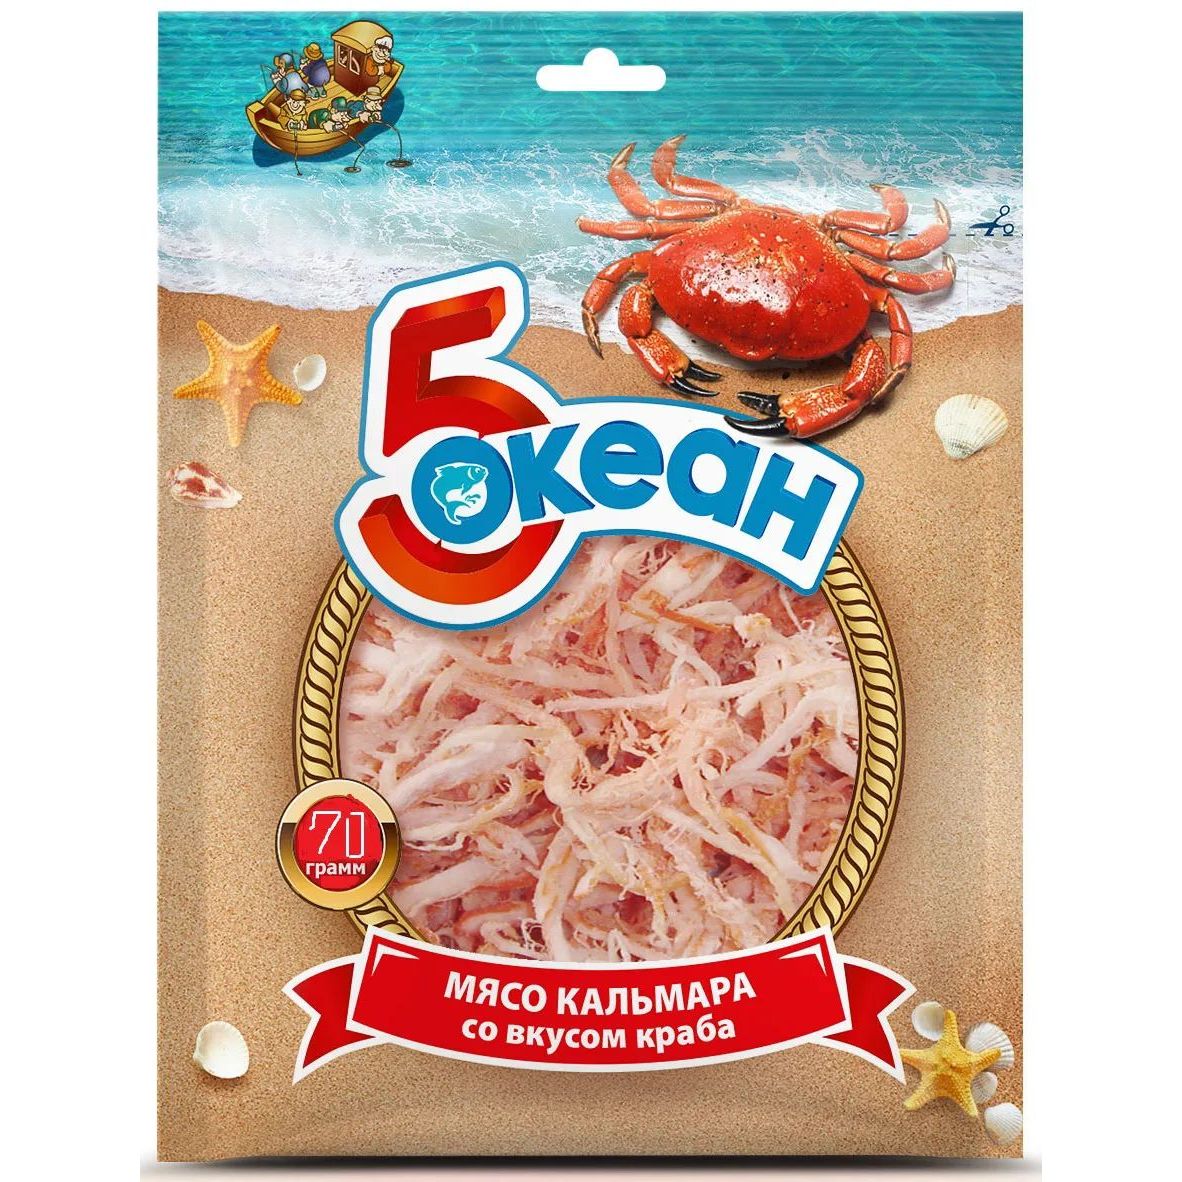 Сушеный краб. Фигурка Safari Ltd рифовый кальмар 266229. Кальмар со вкусом краба. Мясо кальмара. Мясо кальмара со вкусом краба.